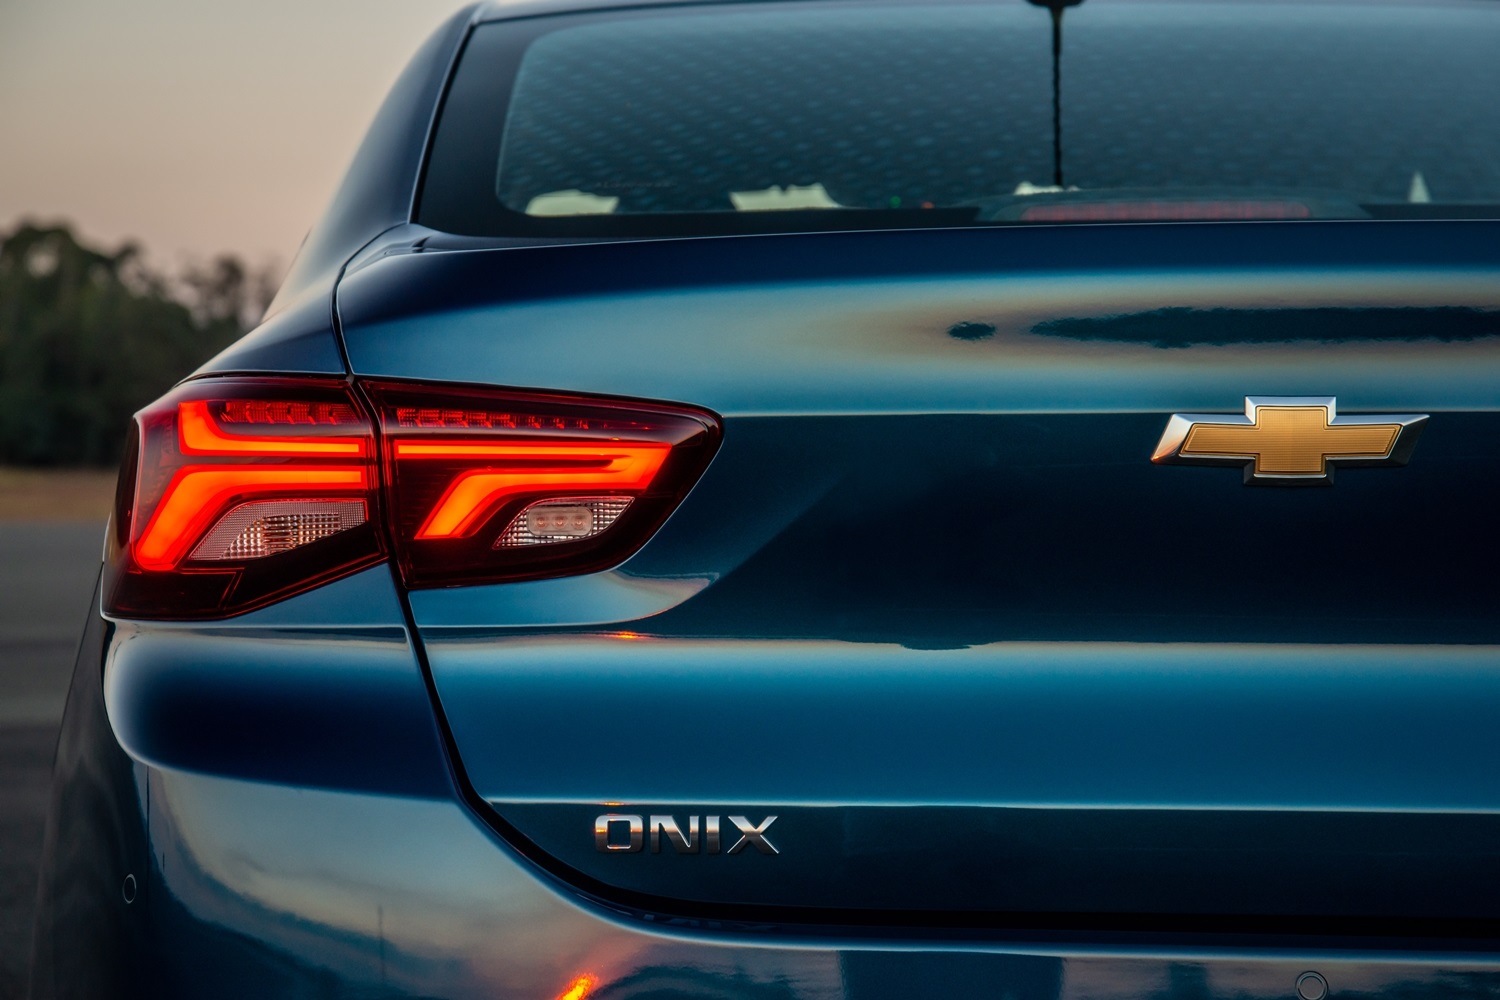 Chevy unveils Onix subcompact hatchback in Brazil - Autoblog